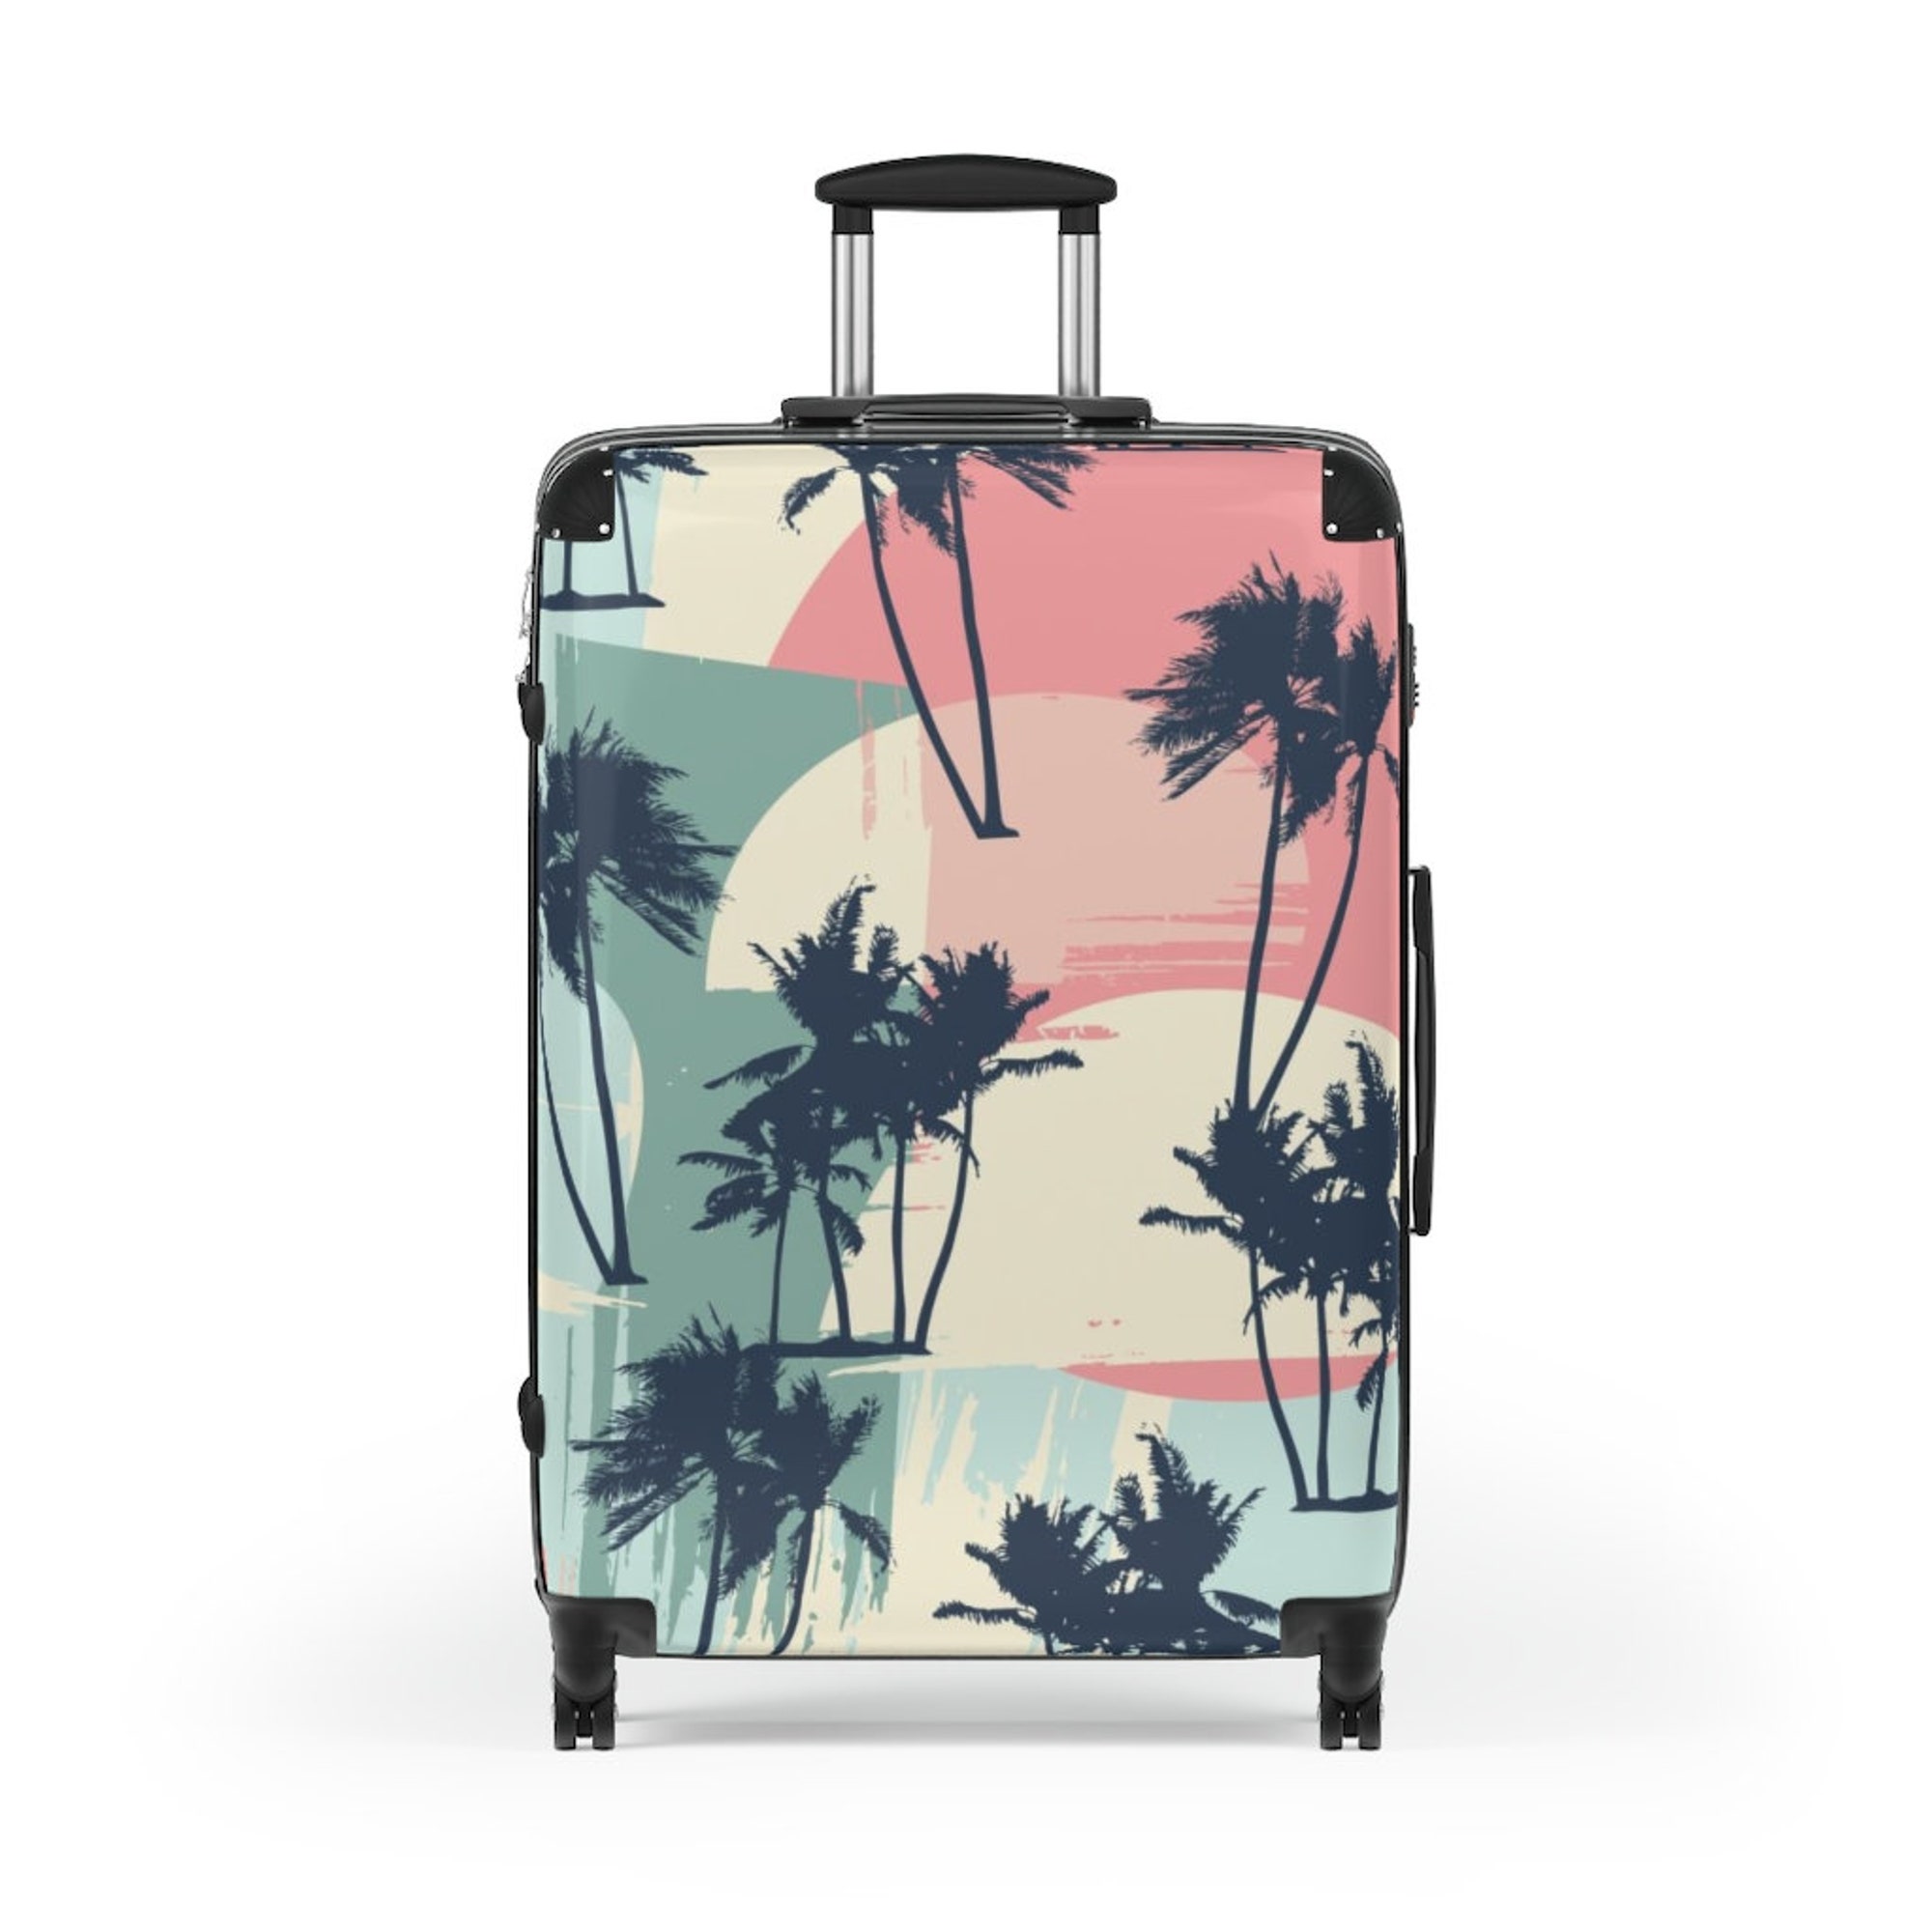 Discover The Aruba Suitcase